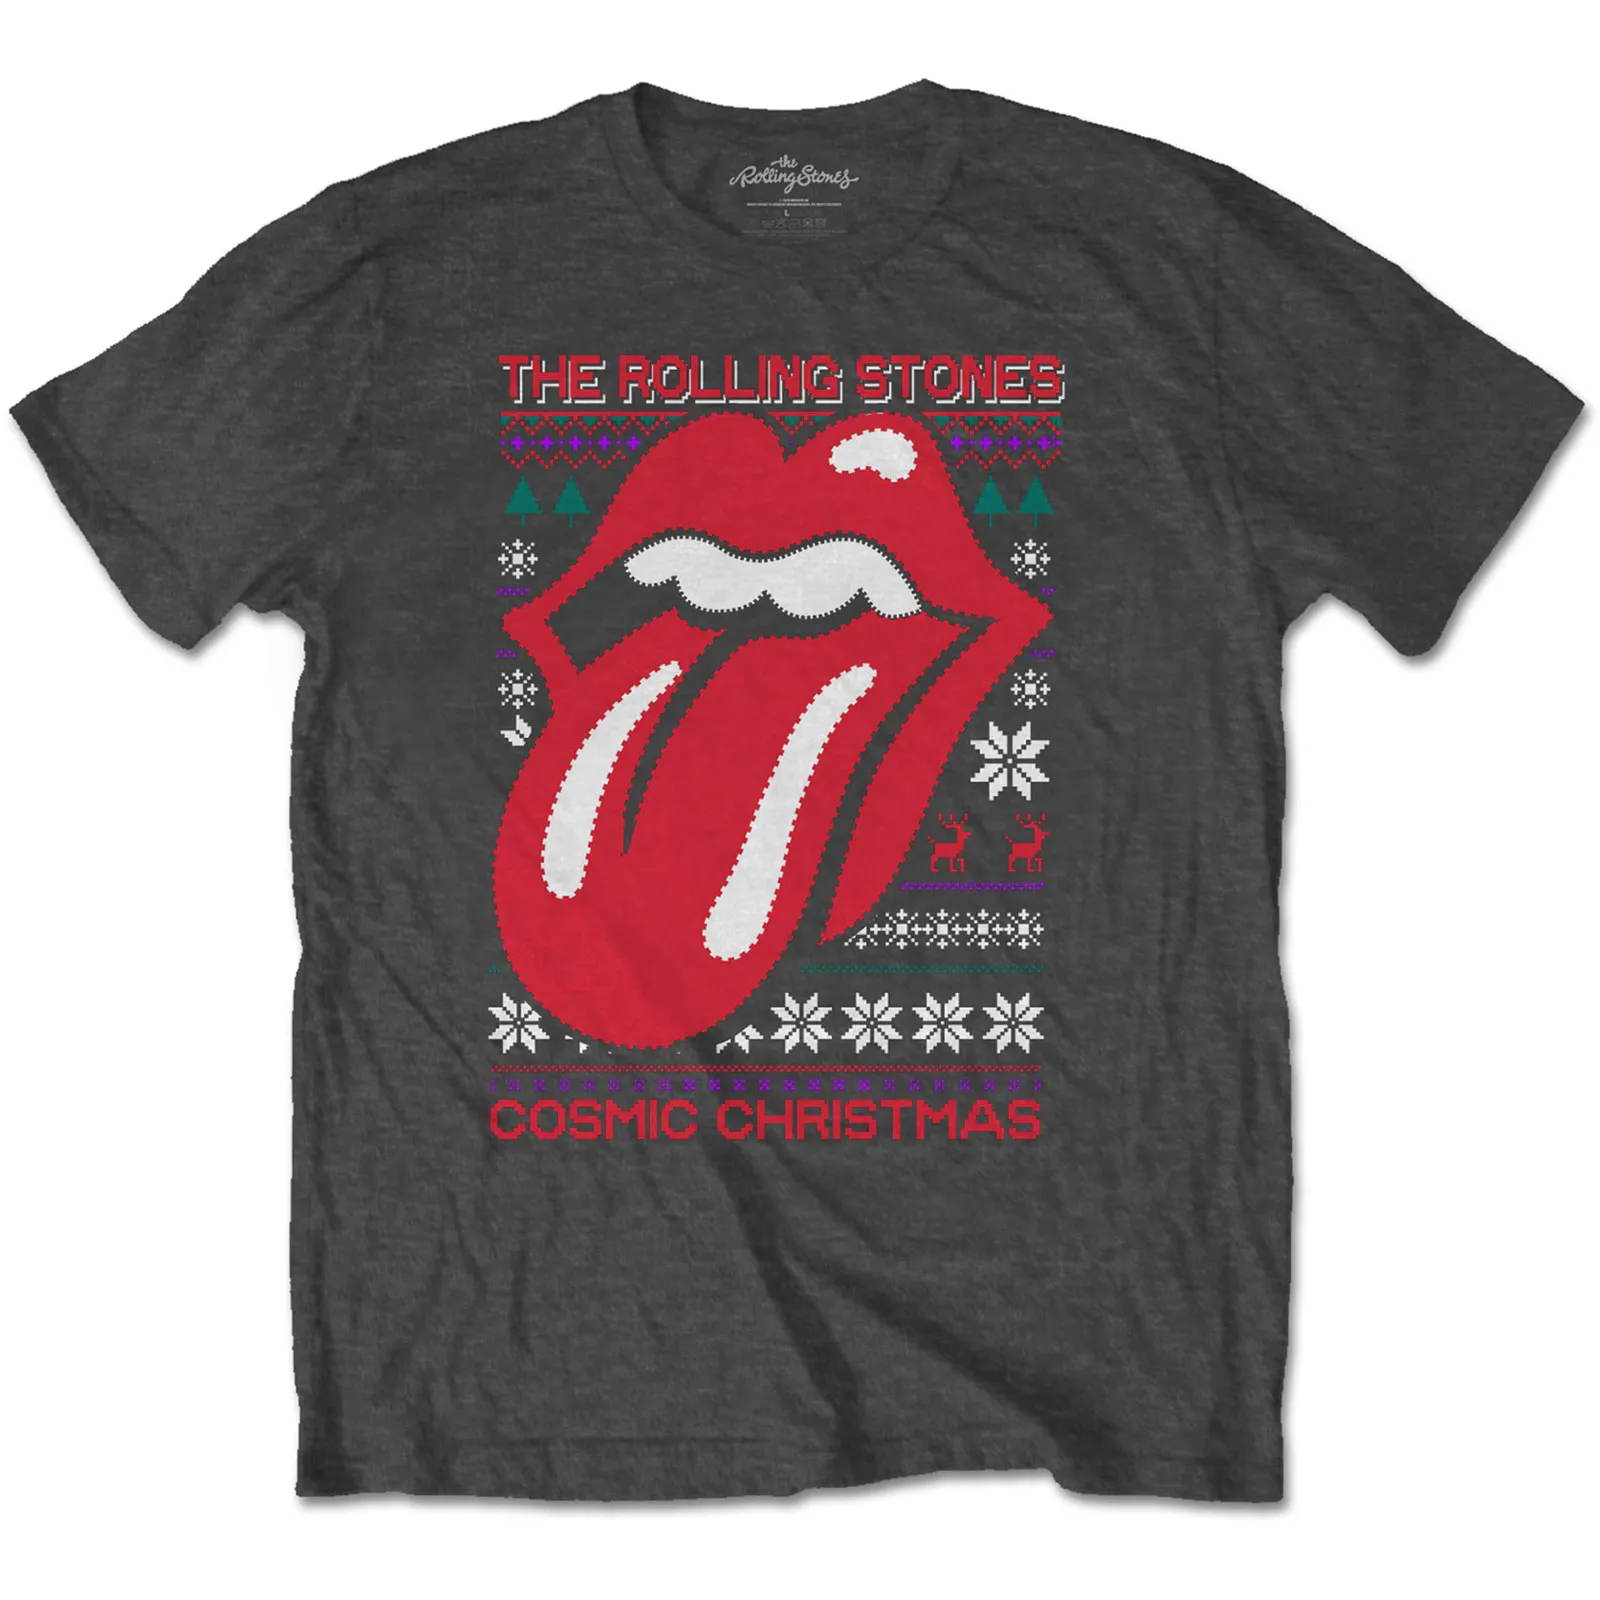 The Rolling Stones - Unisex T-Shirt Cosmic Christmas artwork